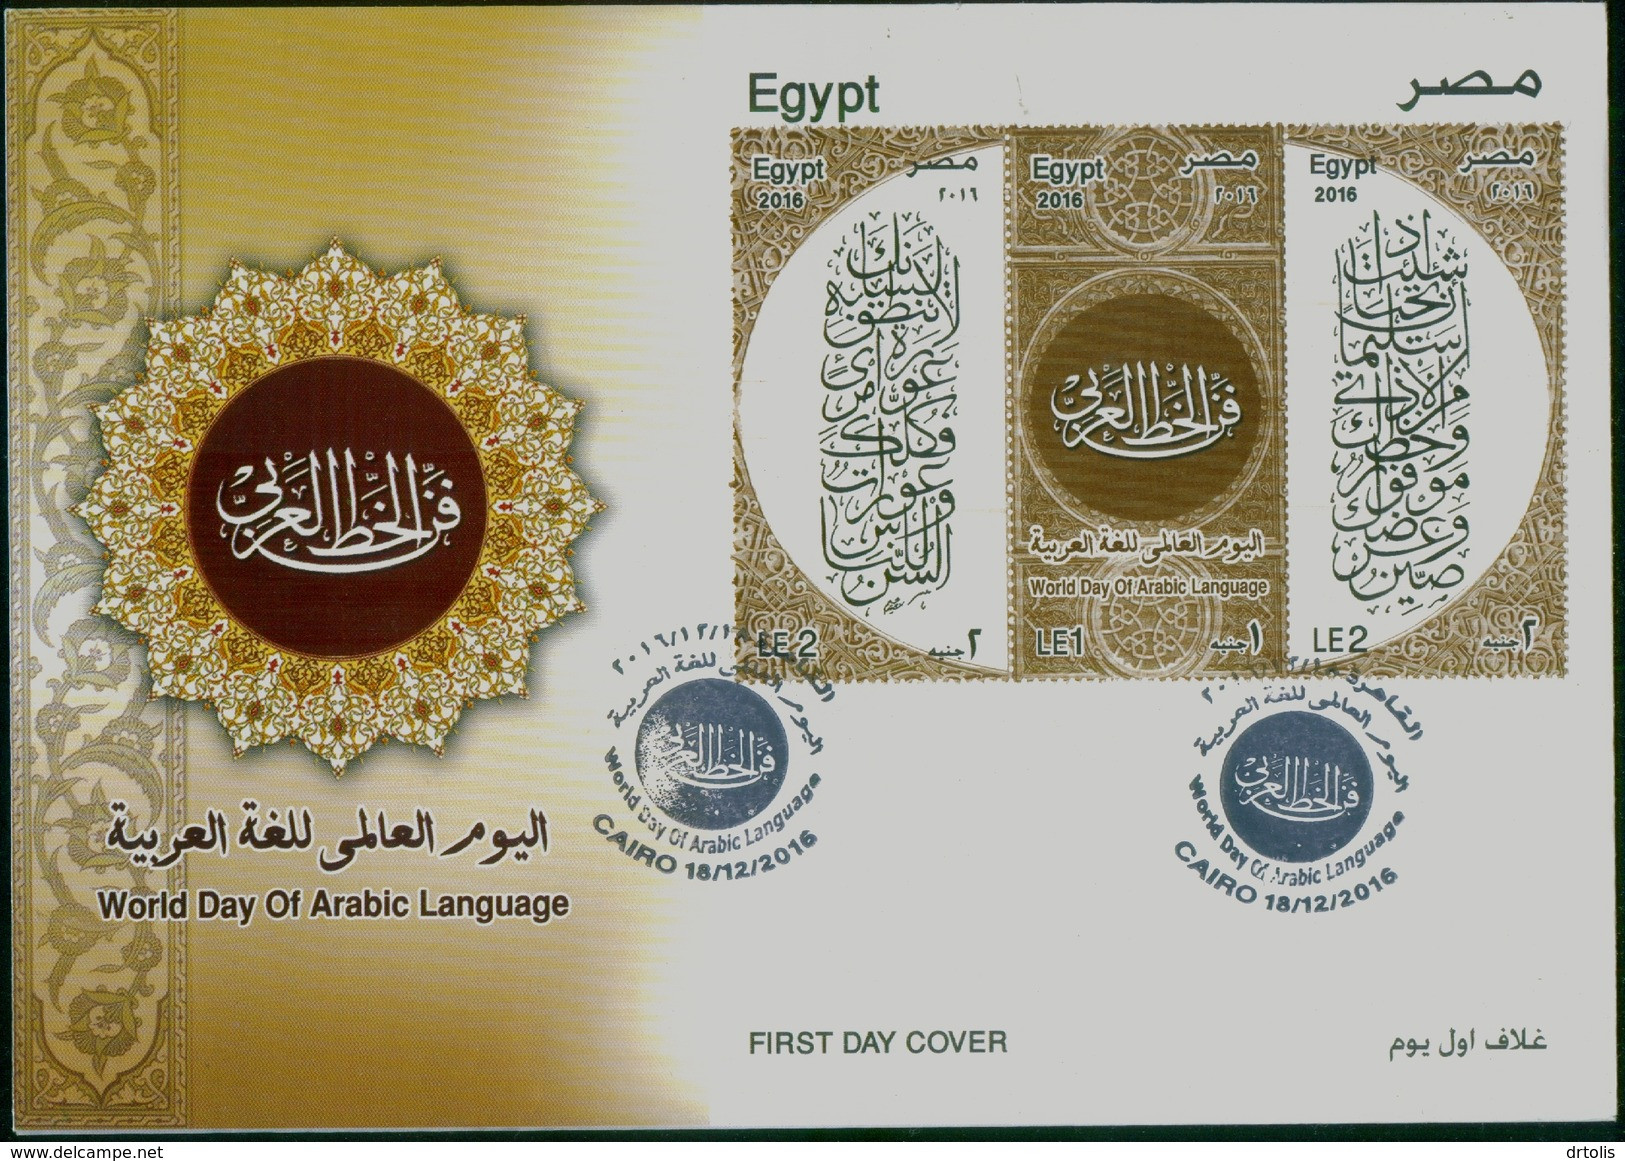 EGYPT / 2016 / WORLD DAY OF ARABIC LANGUAGE / THE ART OF ARABIC CALLIGRAPHY / FDC - Briefe U. Dokumente